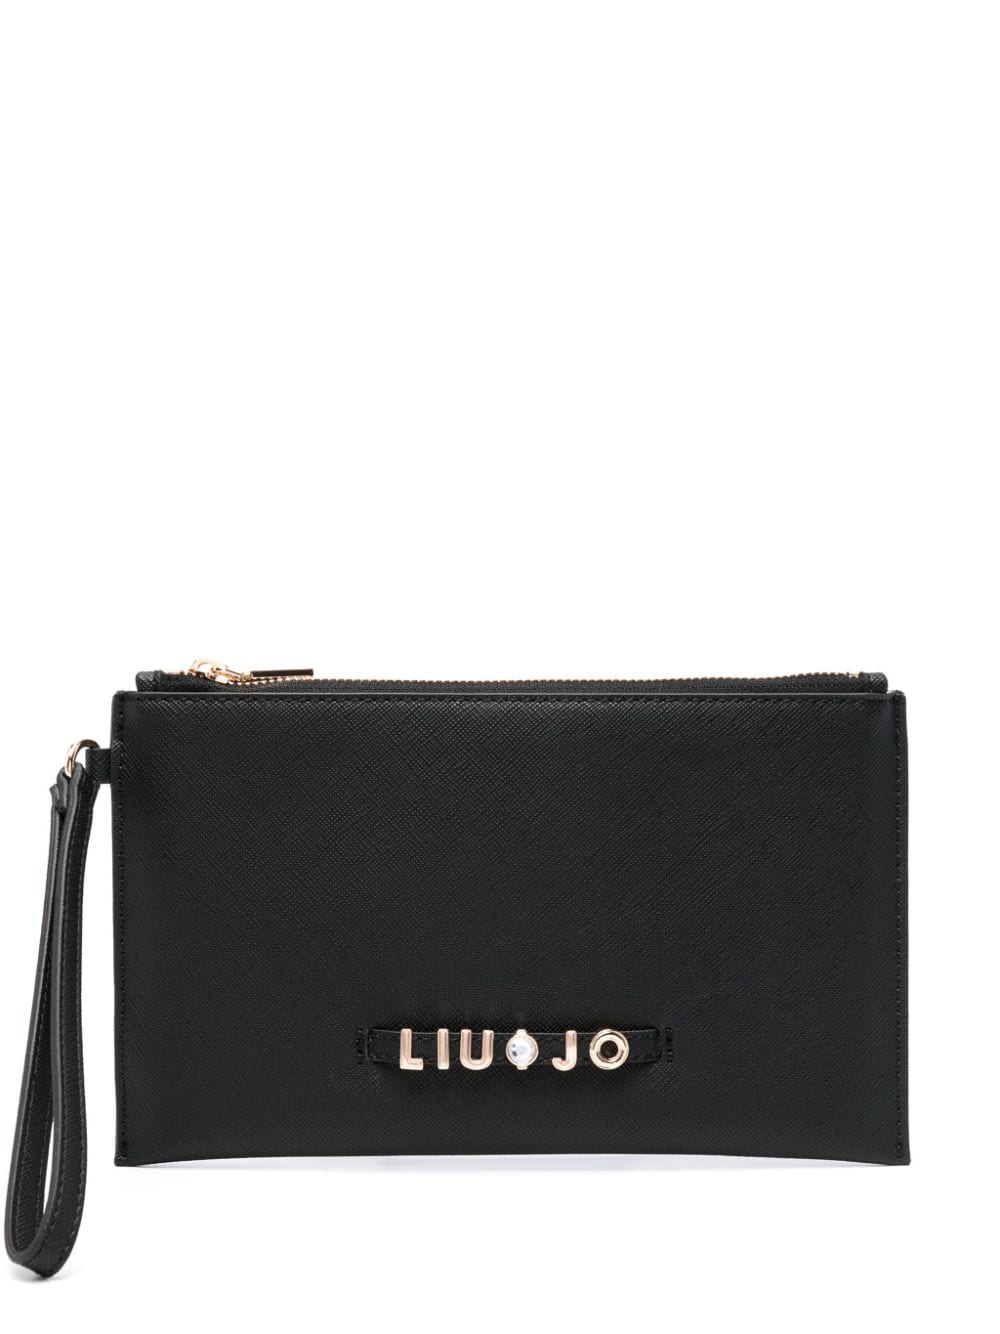 LIU JO logo-lettering purse - Nero